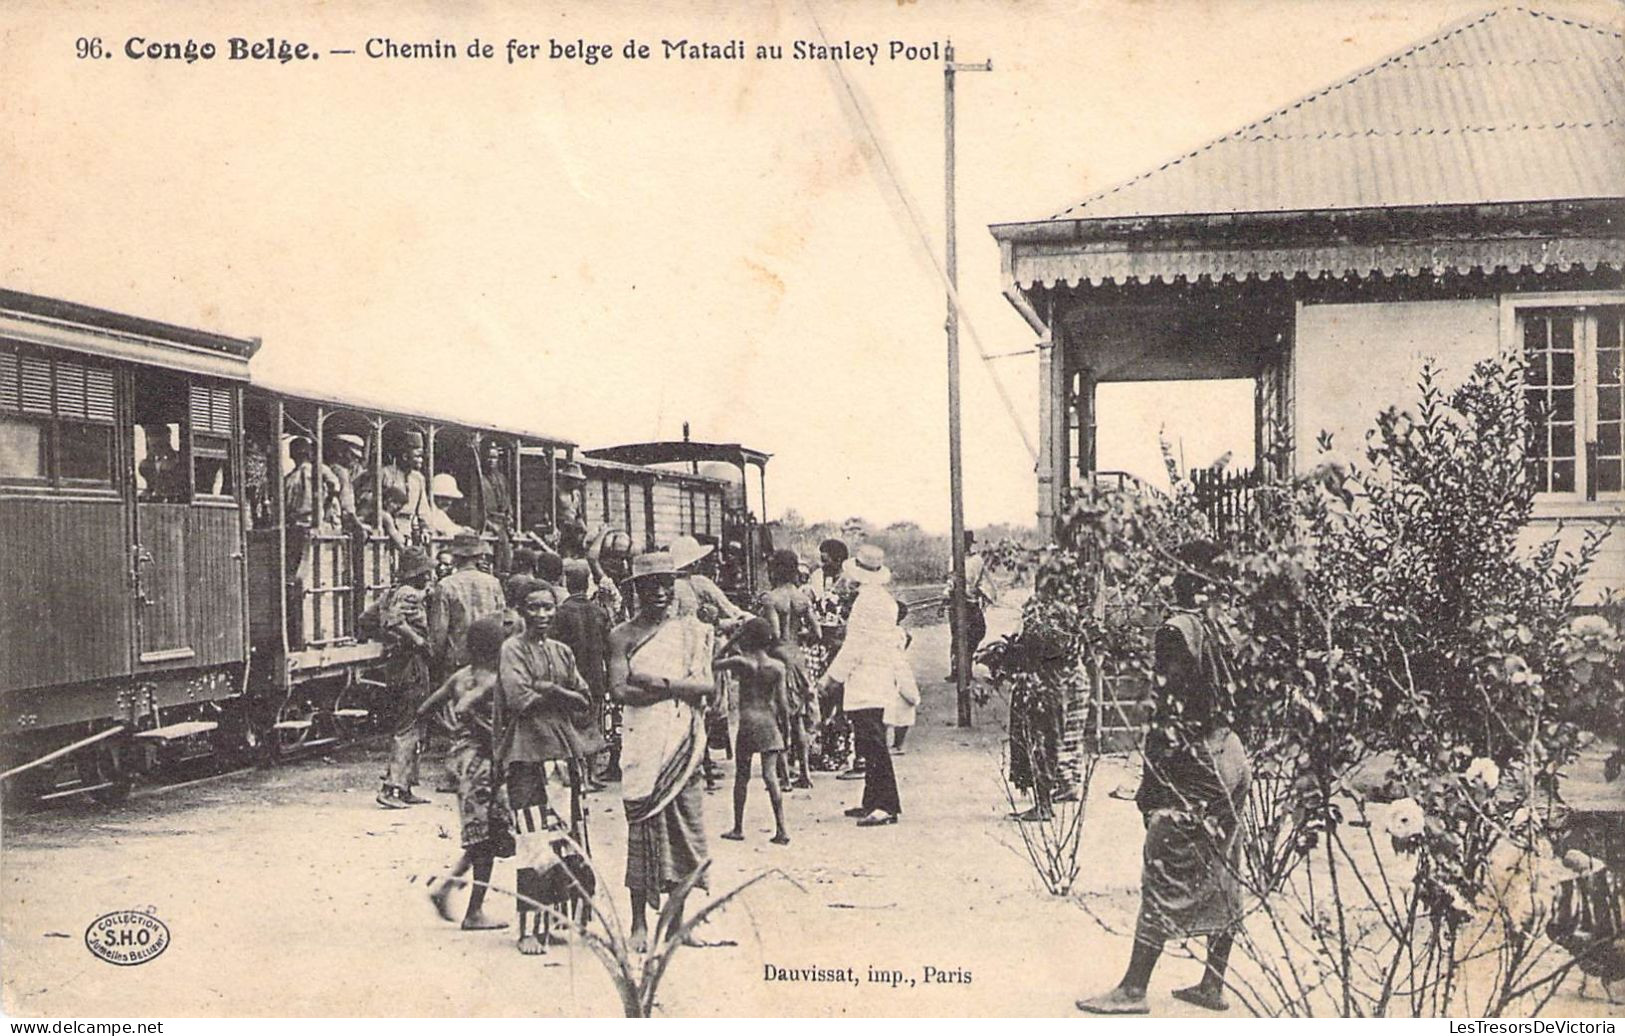 Congo Belge - Chemin De Fer Belge De Matadi Au Stanley Pool - Dauvissat - Animé - Train  - Carte Postale Ancienne - Belgian Congo